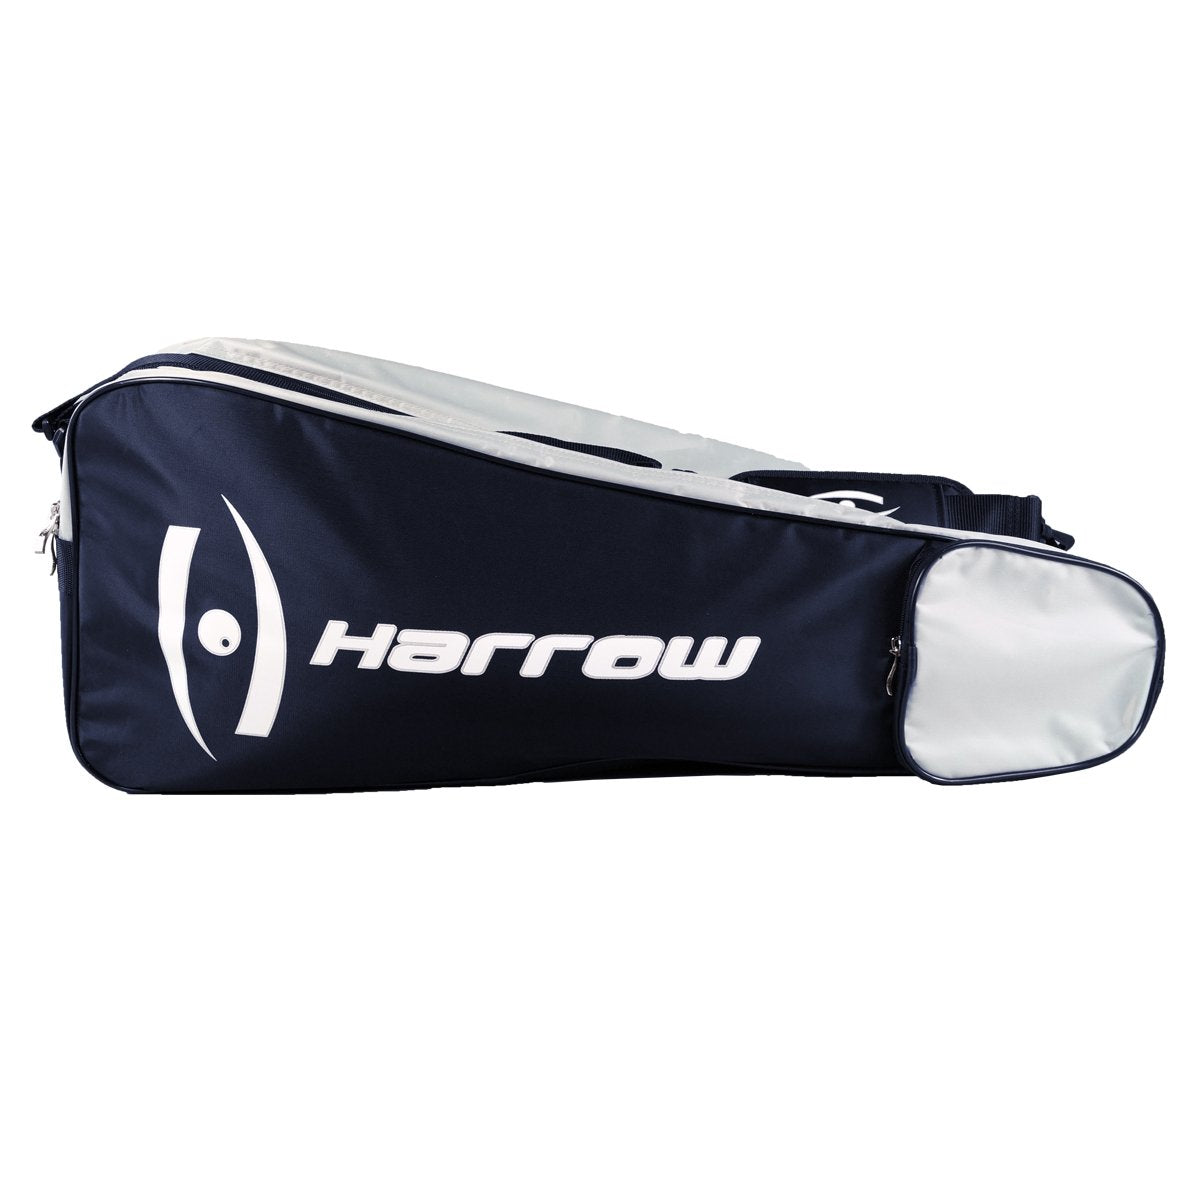 3 Racquet Bag - Harrow Sports